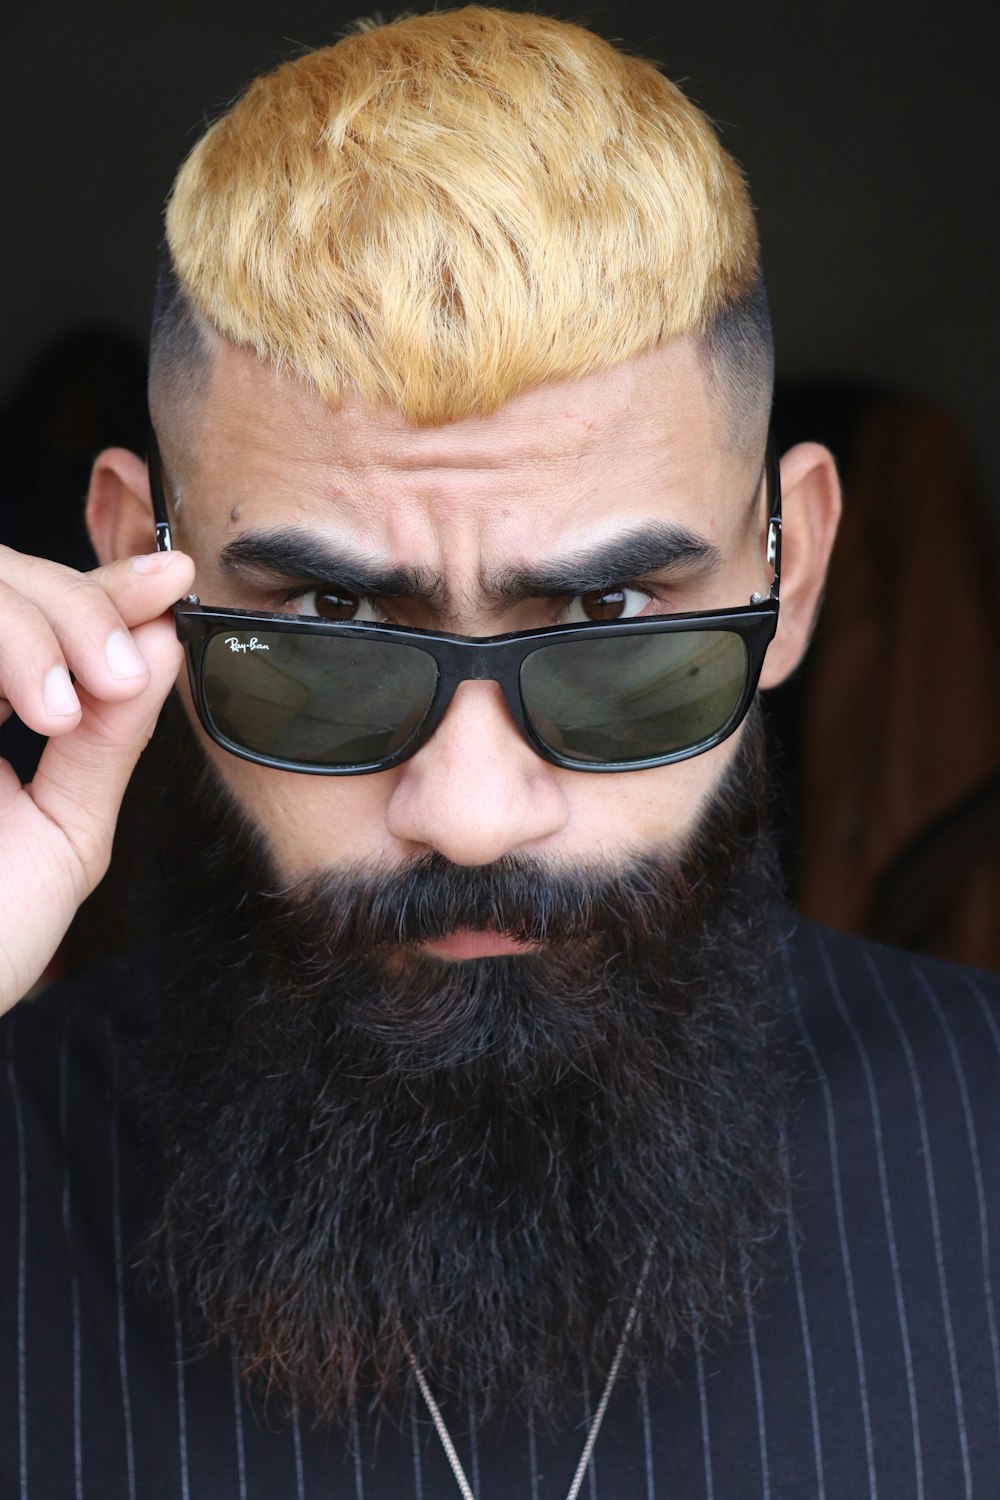 a man with a beard wearing sunglasses